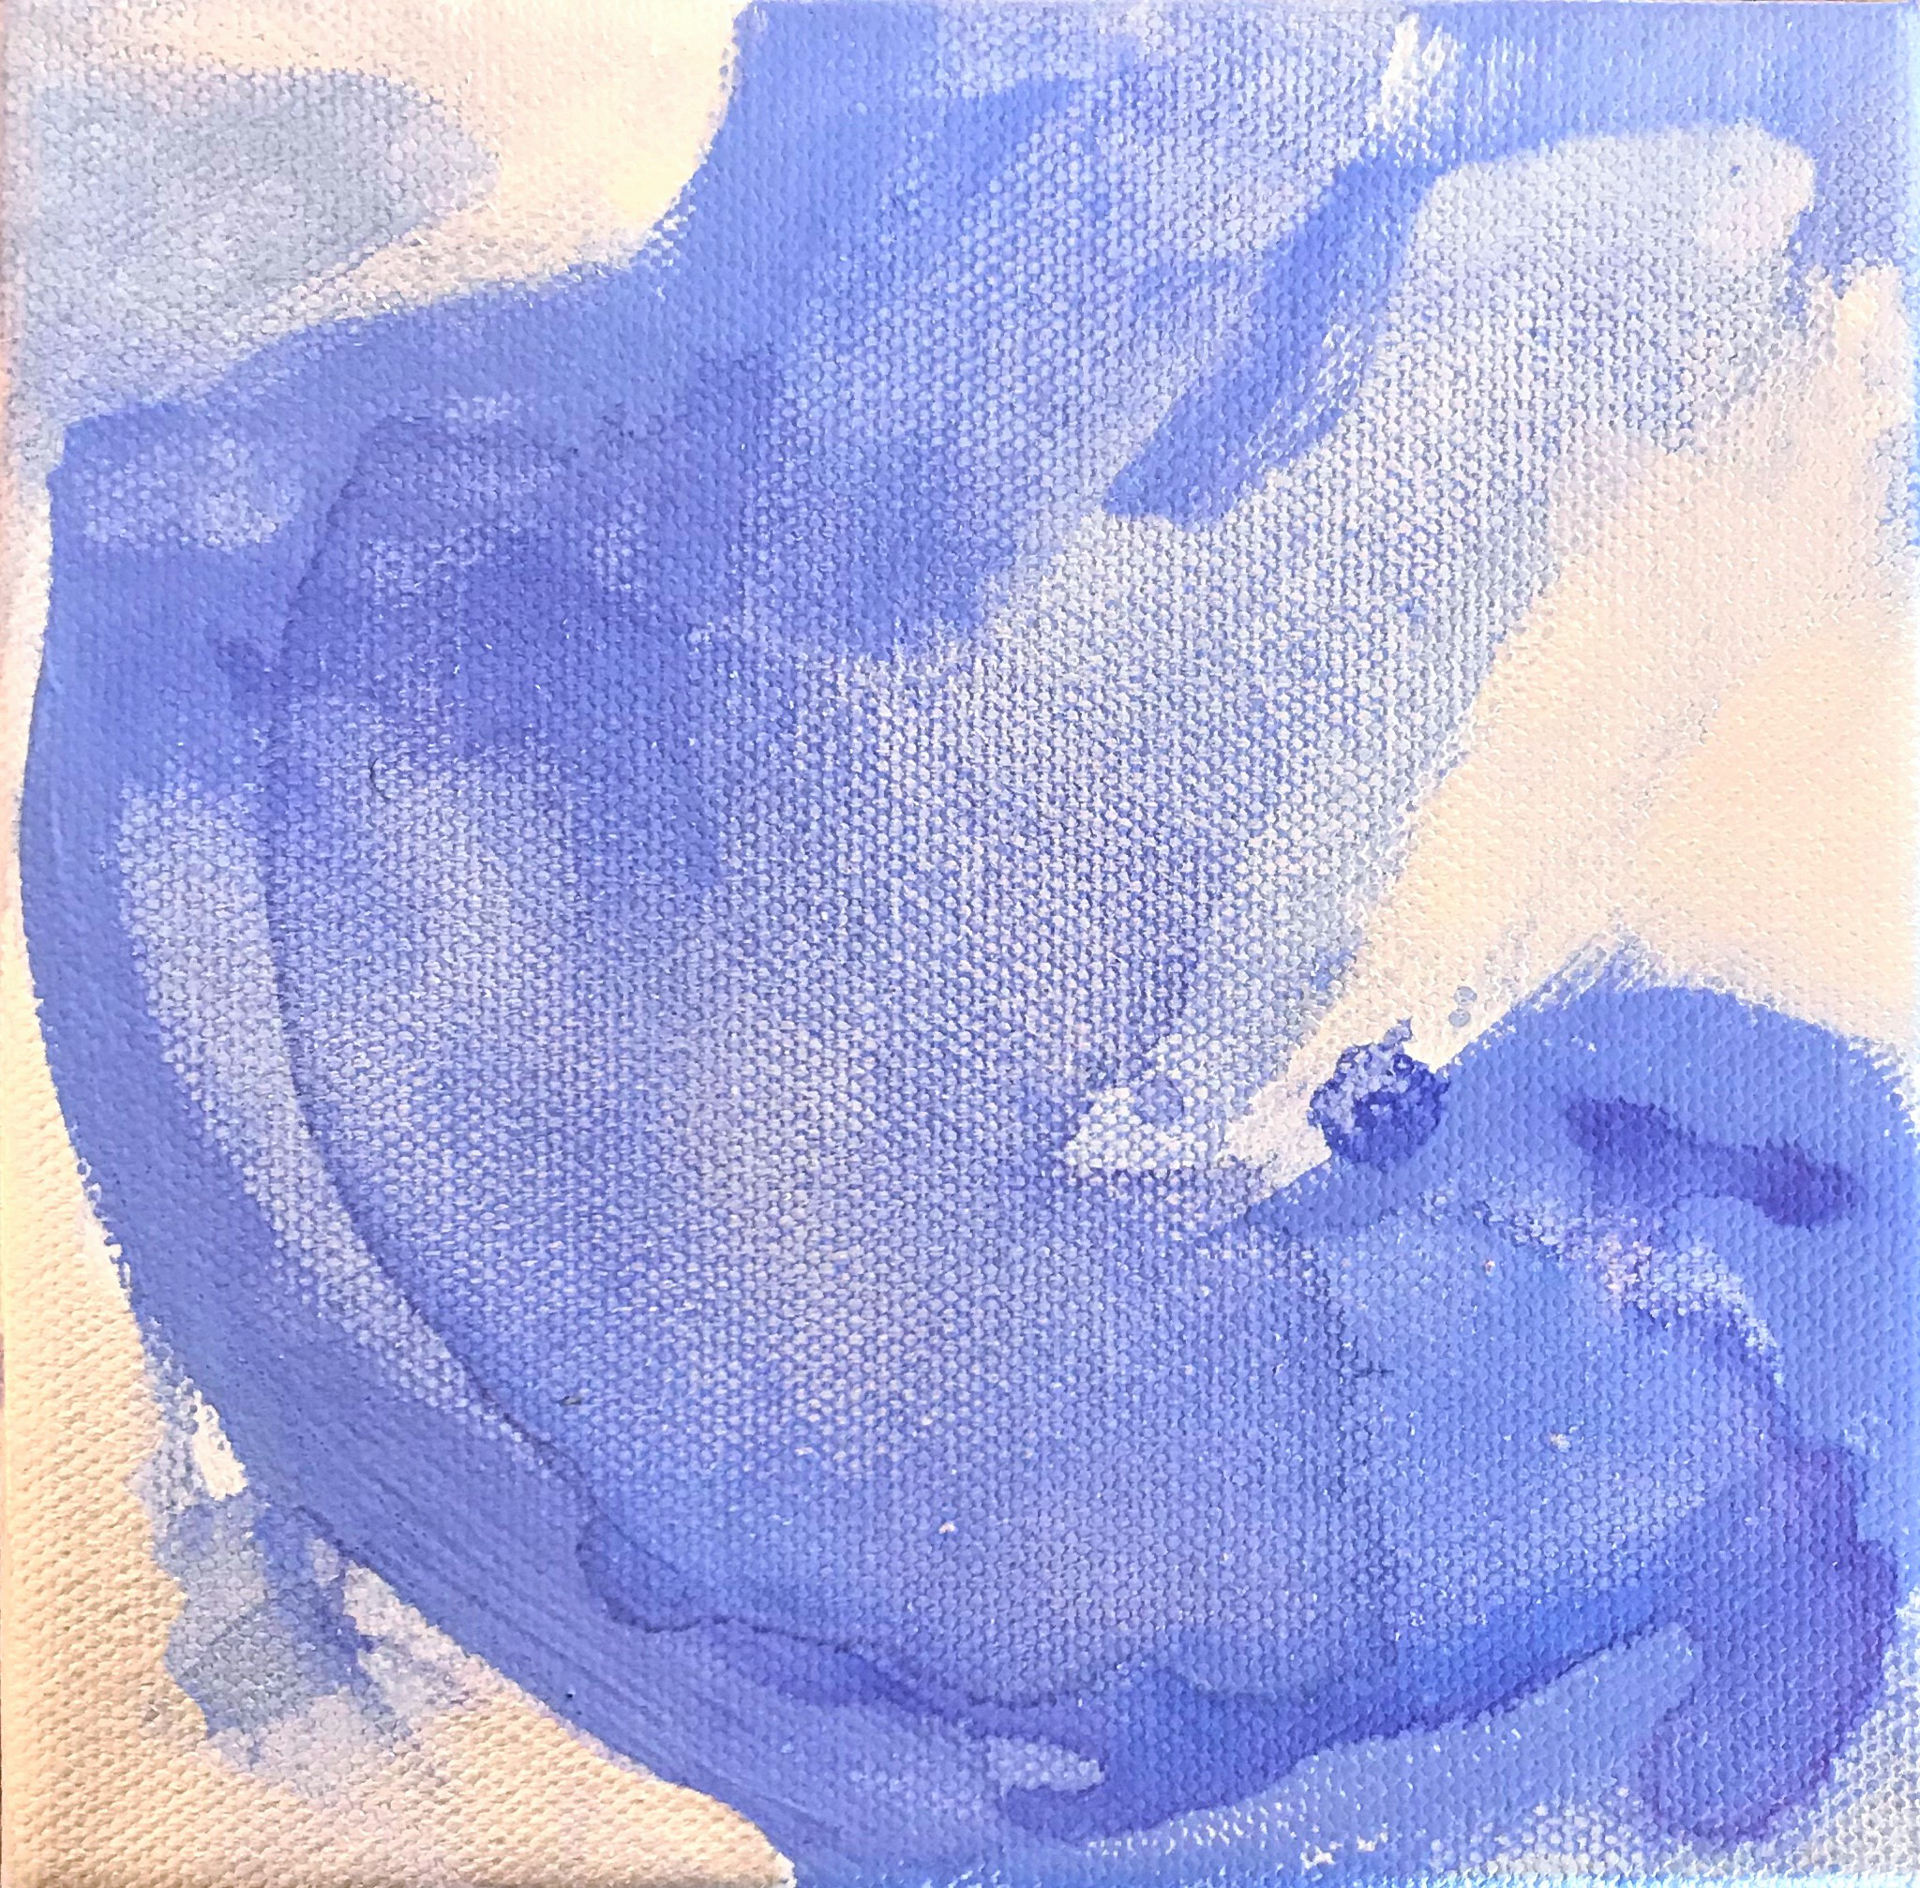 Bleu No. 2 by Leslie Poteet Busker